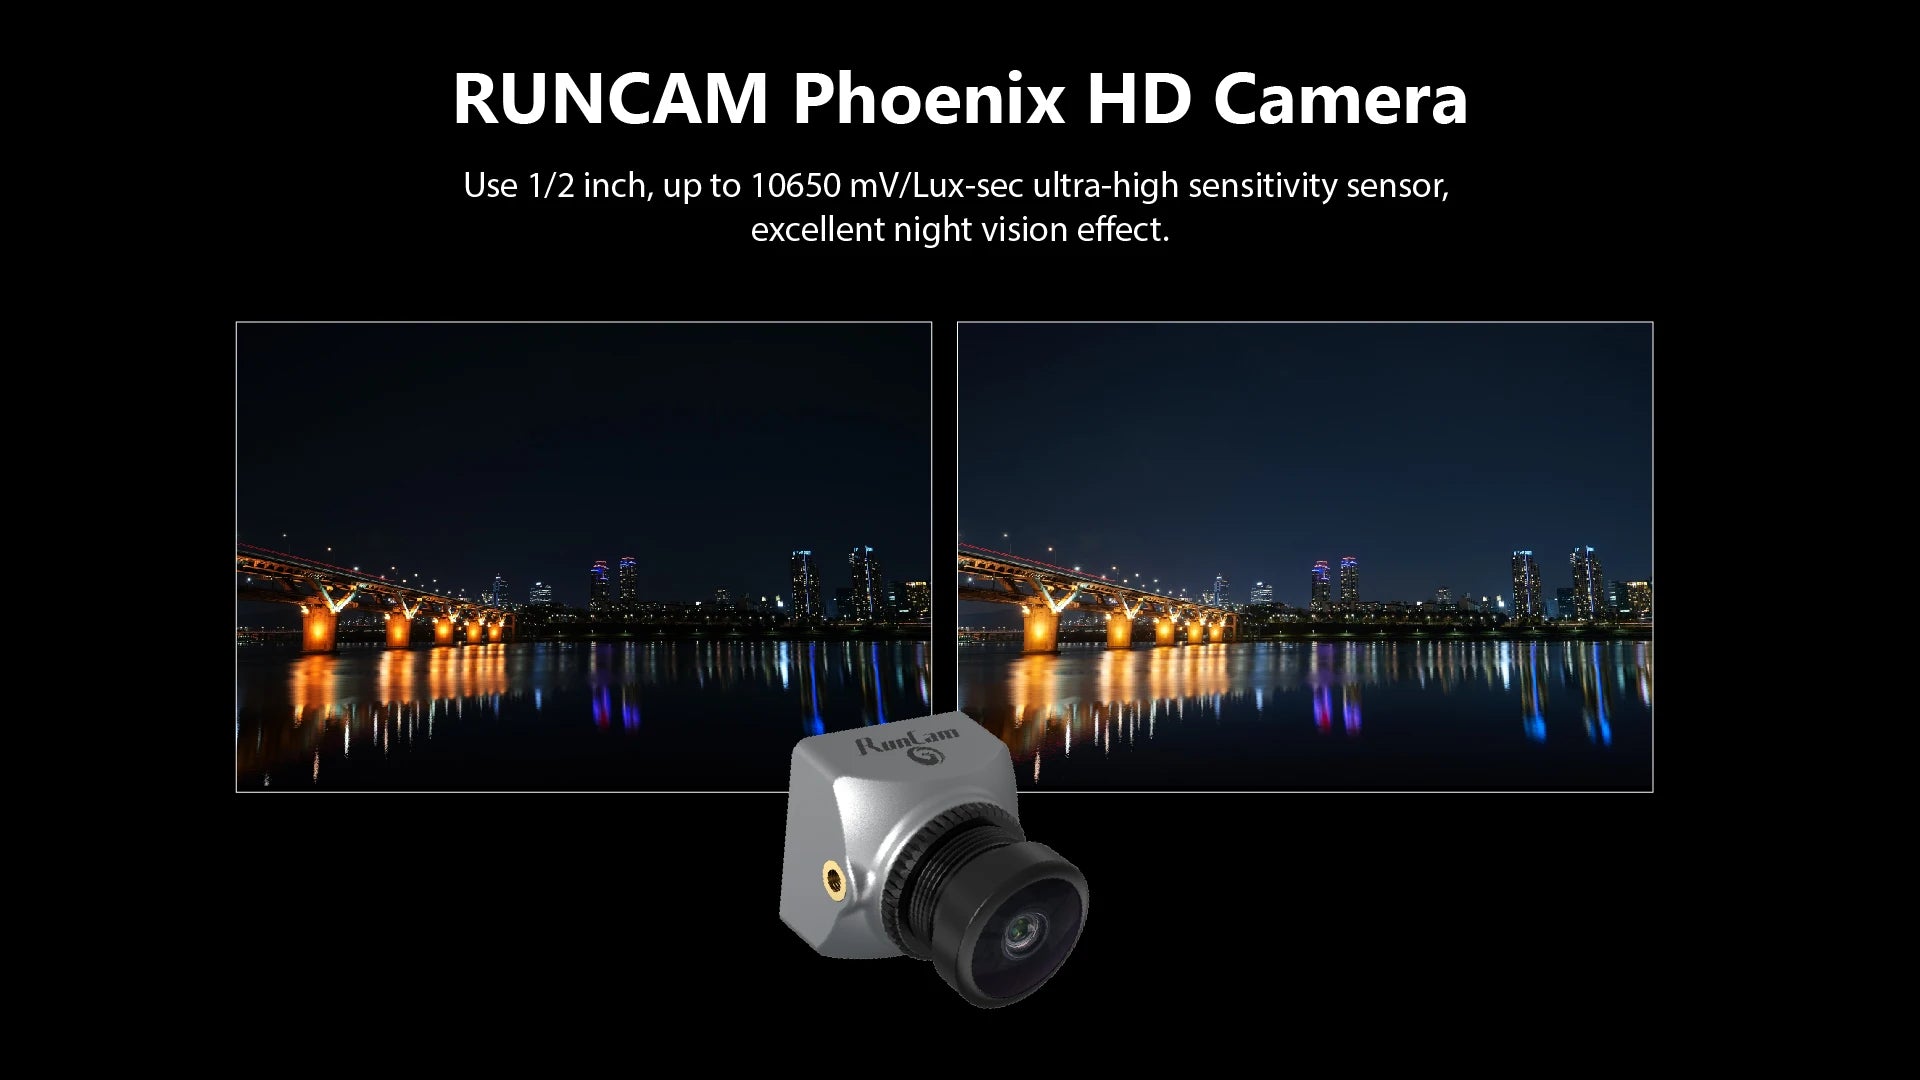 RunCam Link Phoenix HD Kit, RUNCAM Phoenix HD Camera Use 1/2 inch, up to 10650 mV/L